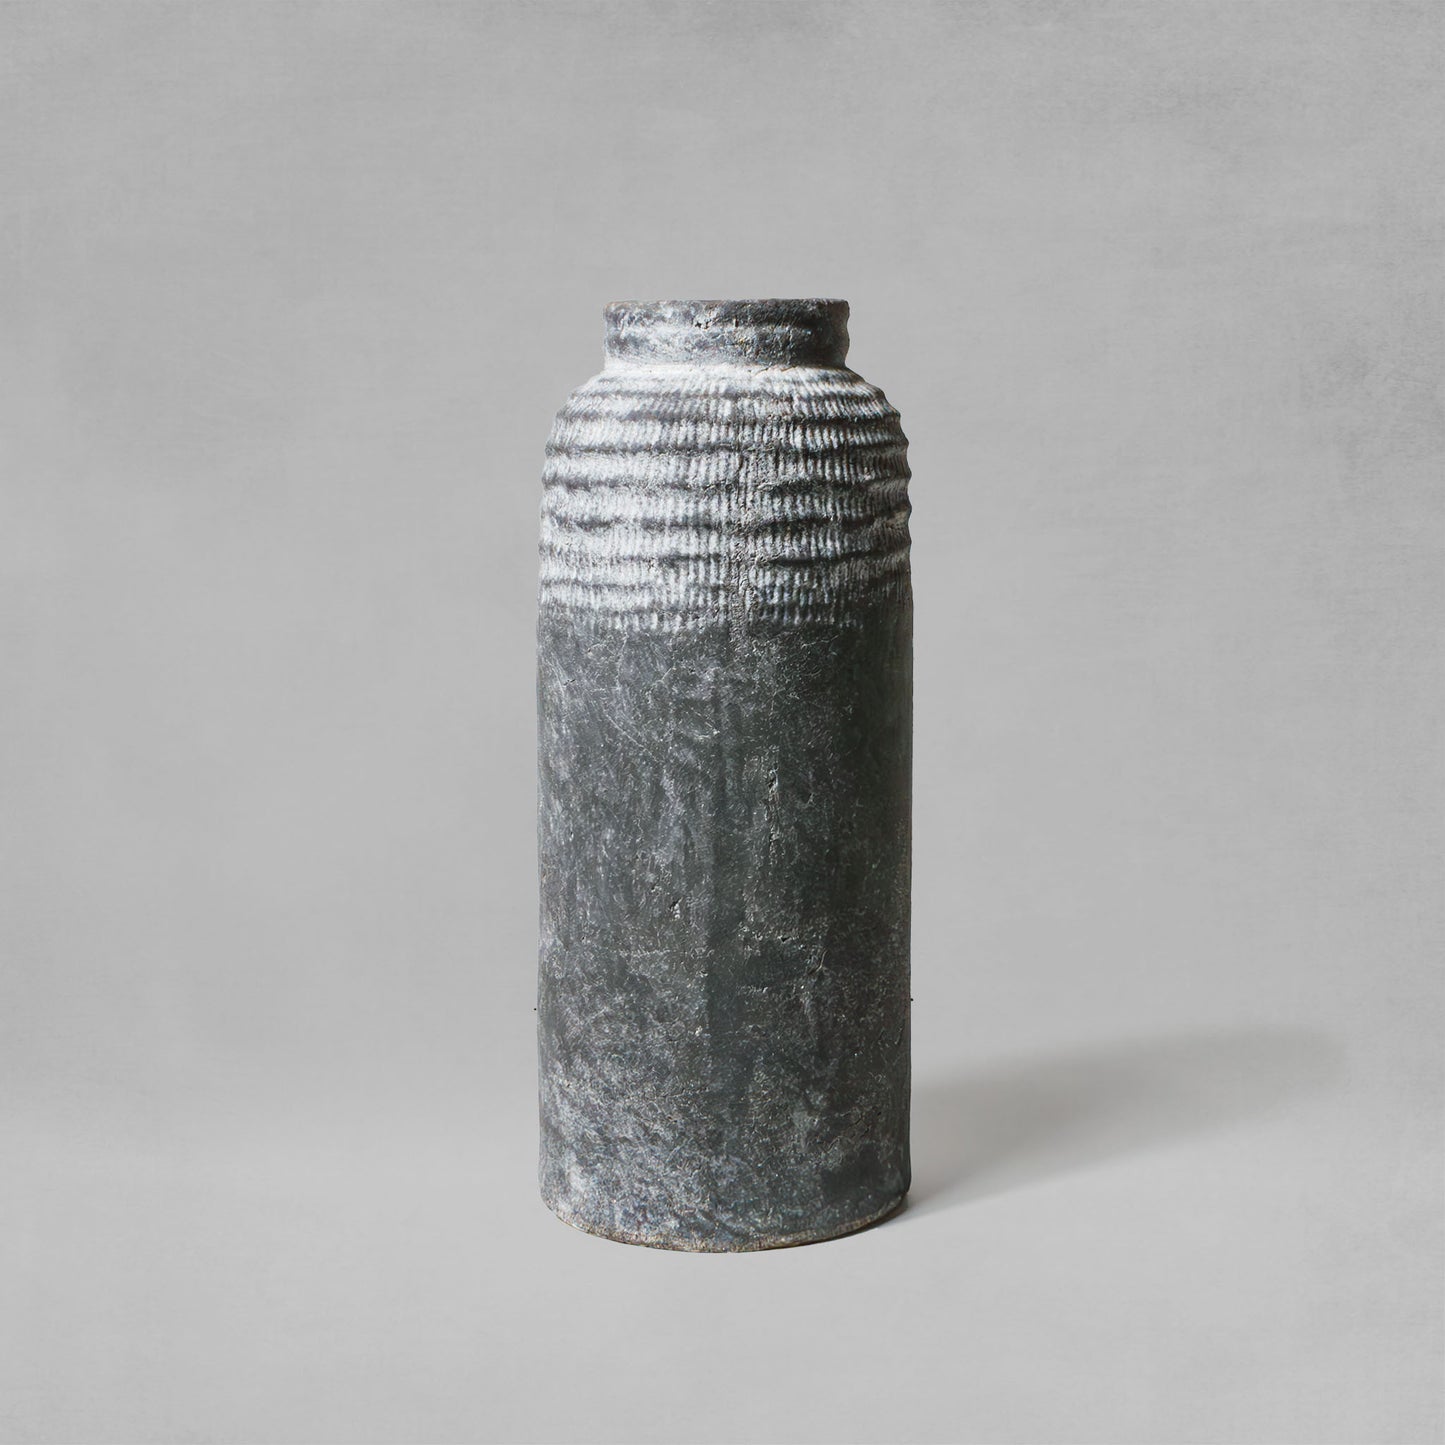 Large artisanal weathered gray earthenware vase with gray background.